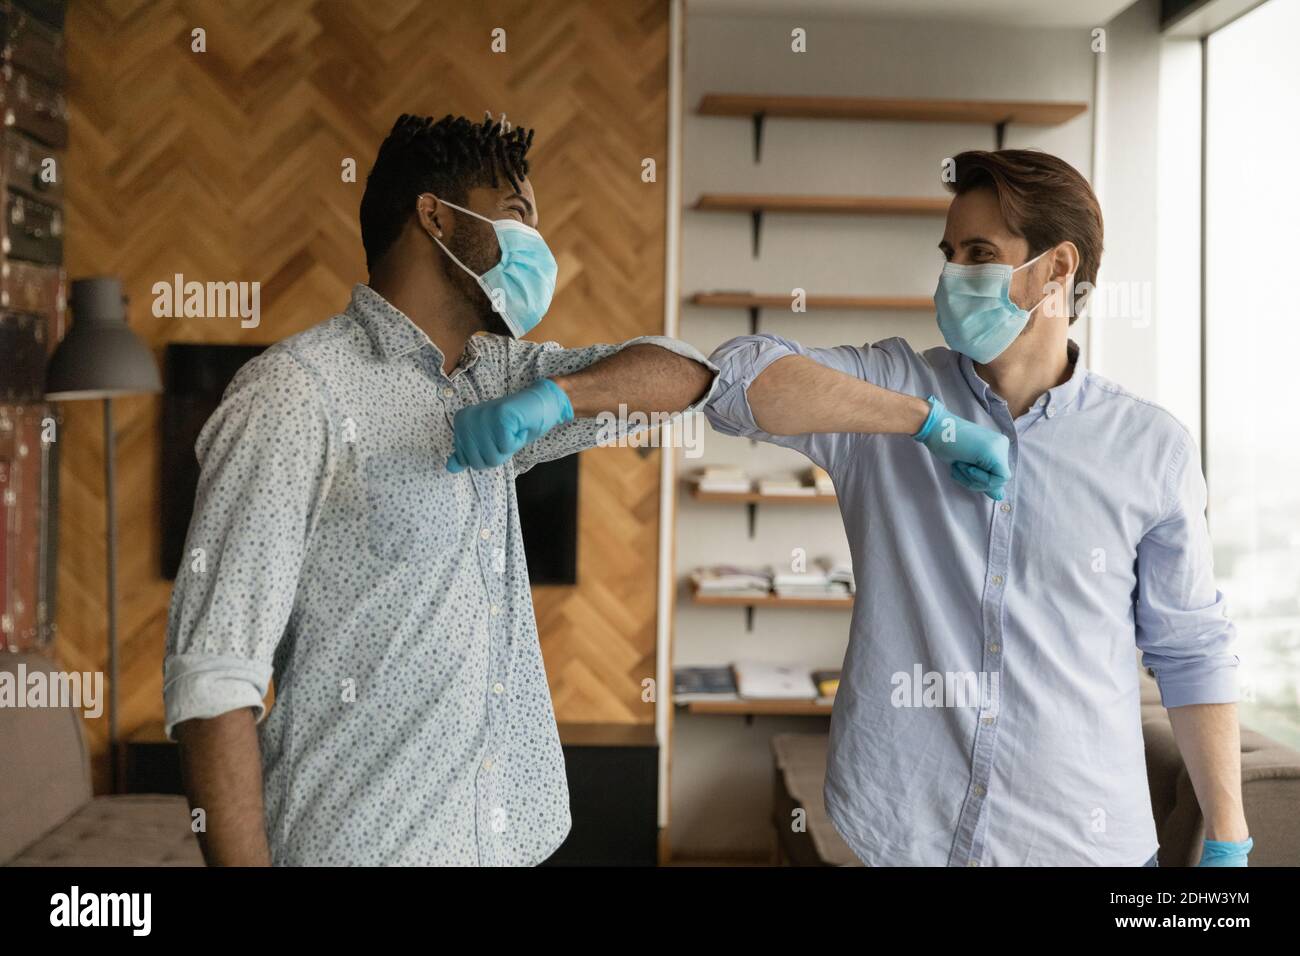 Diverse men touch elbows greeting during coronavirus pandemics Stock Photo